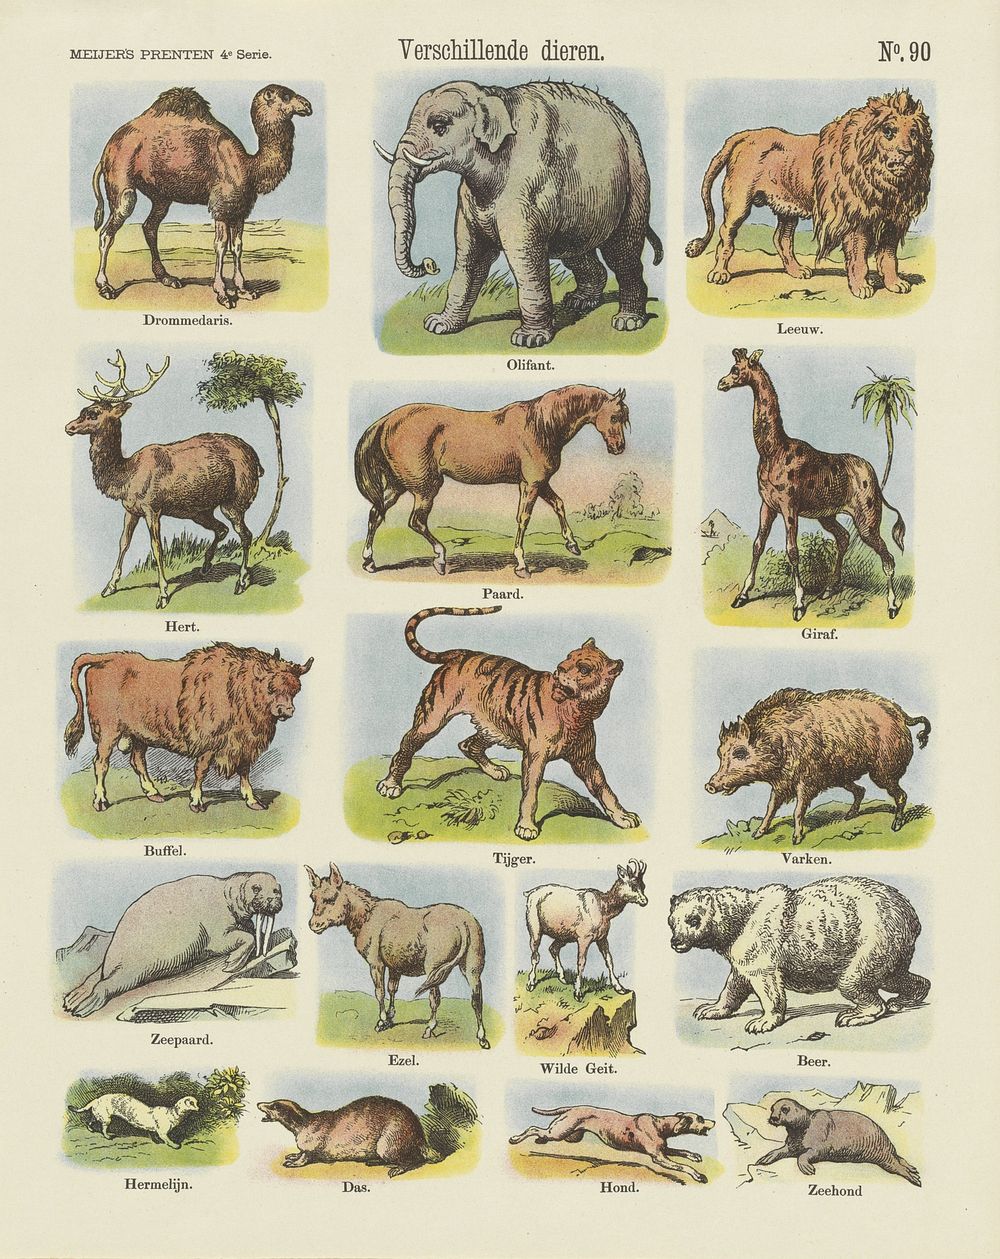 Verschillende dieren (1881) by De Ruyter and Meijer and anonymous